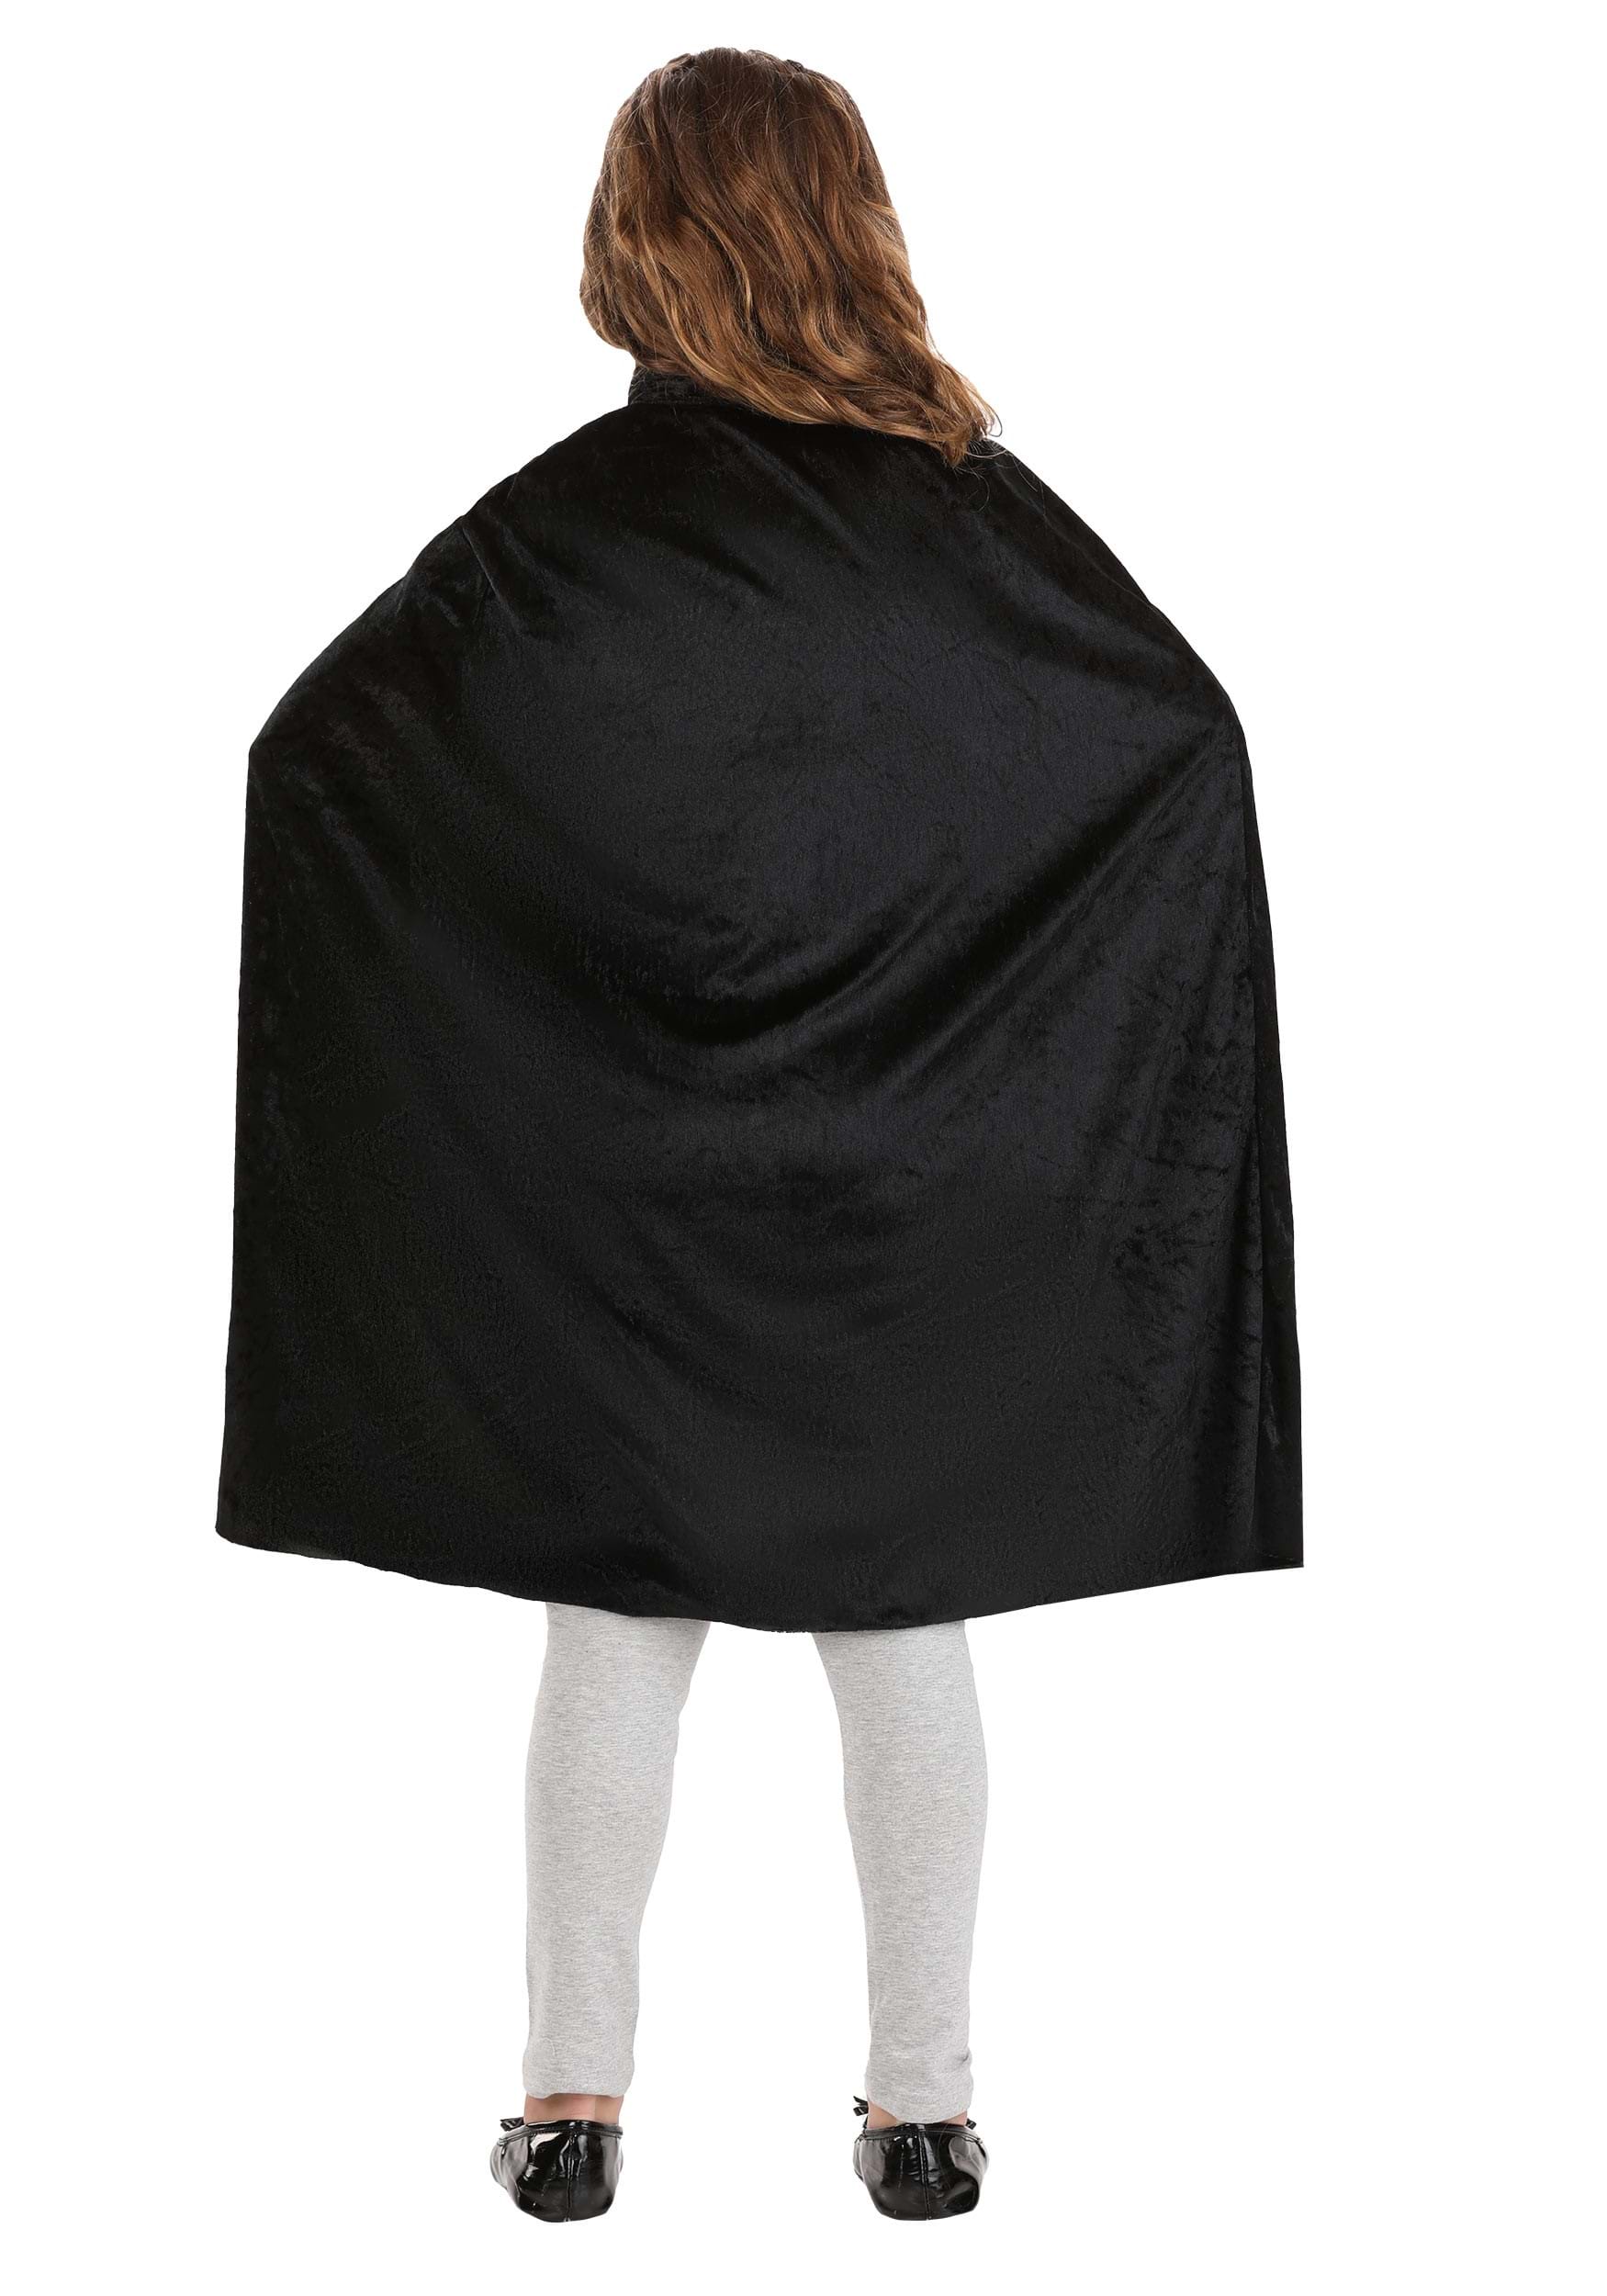 Black Velveteen Kid's Cape , Costume Capes